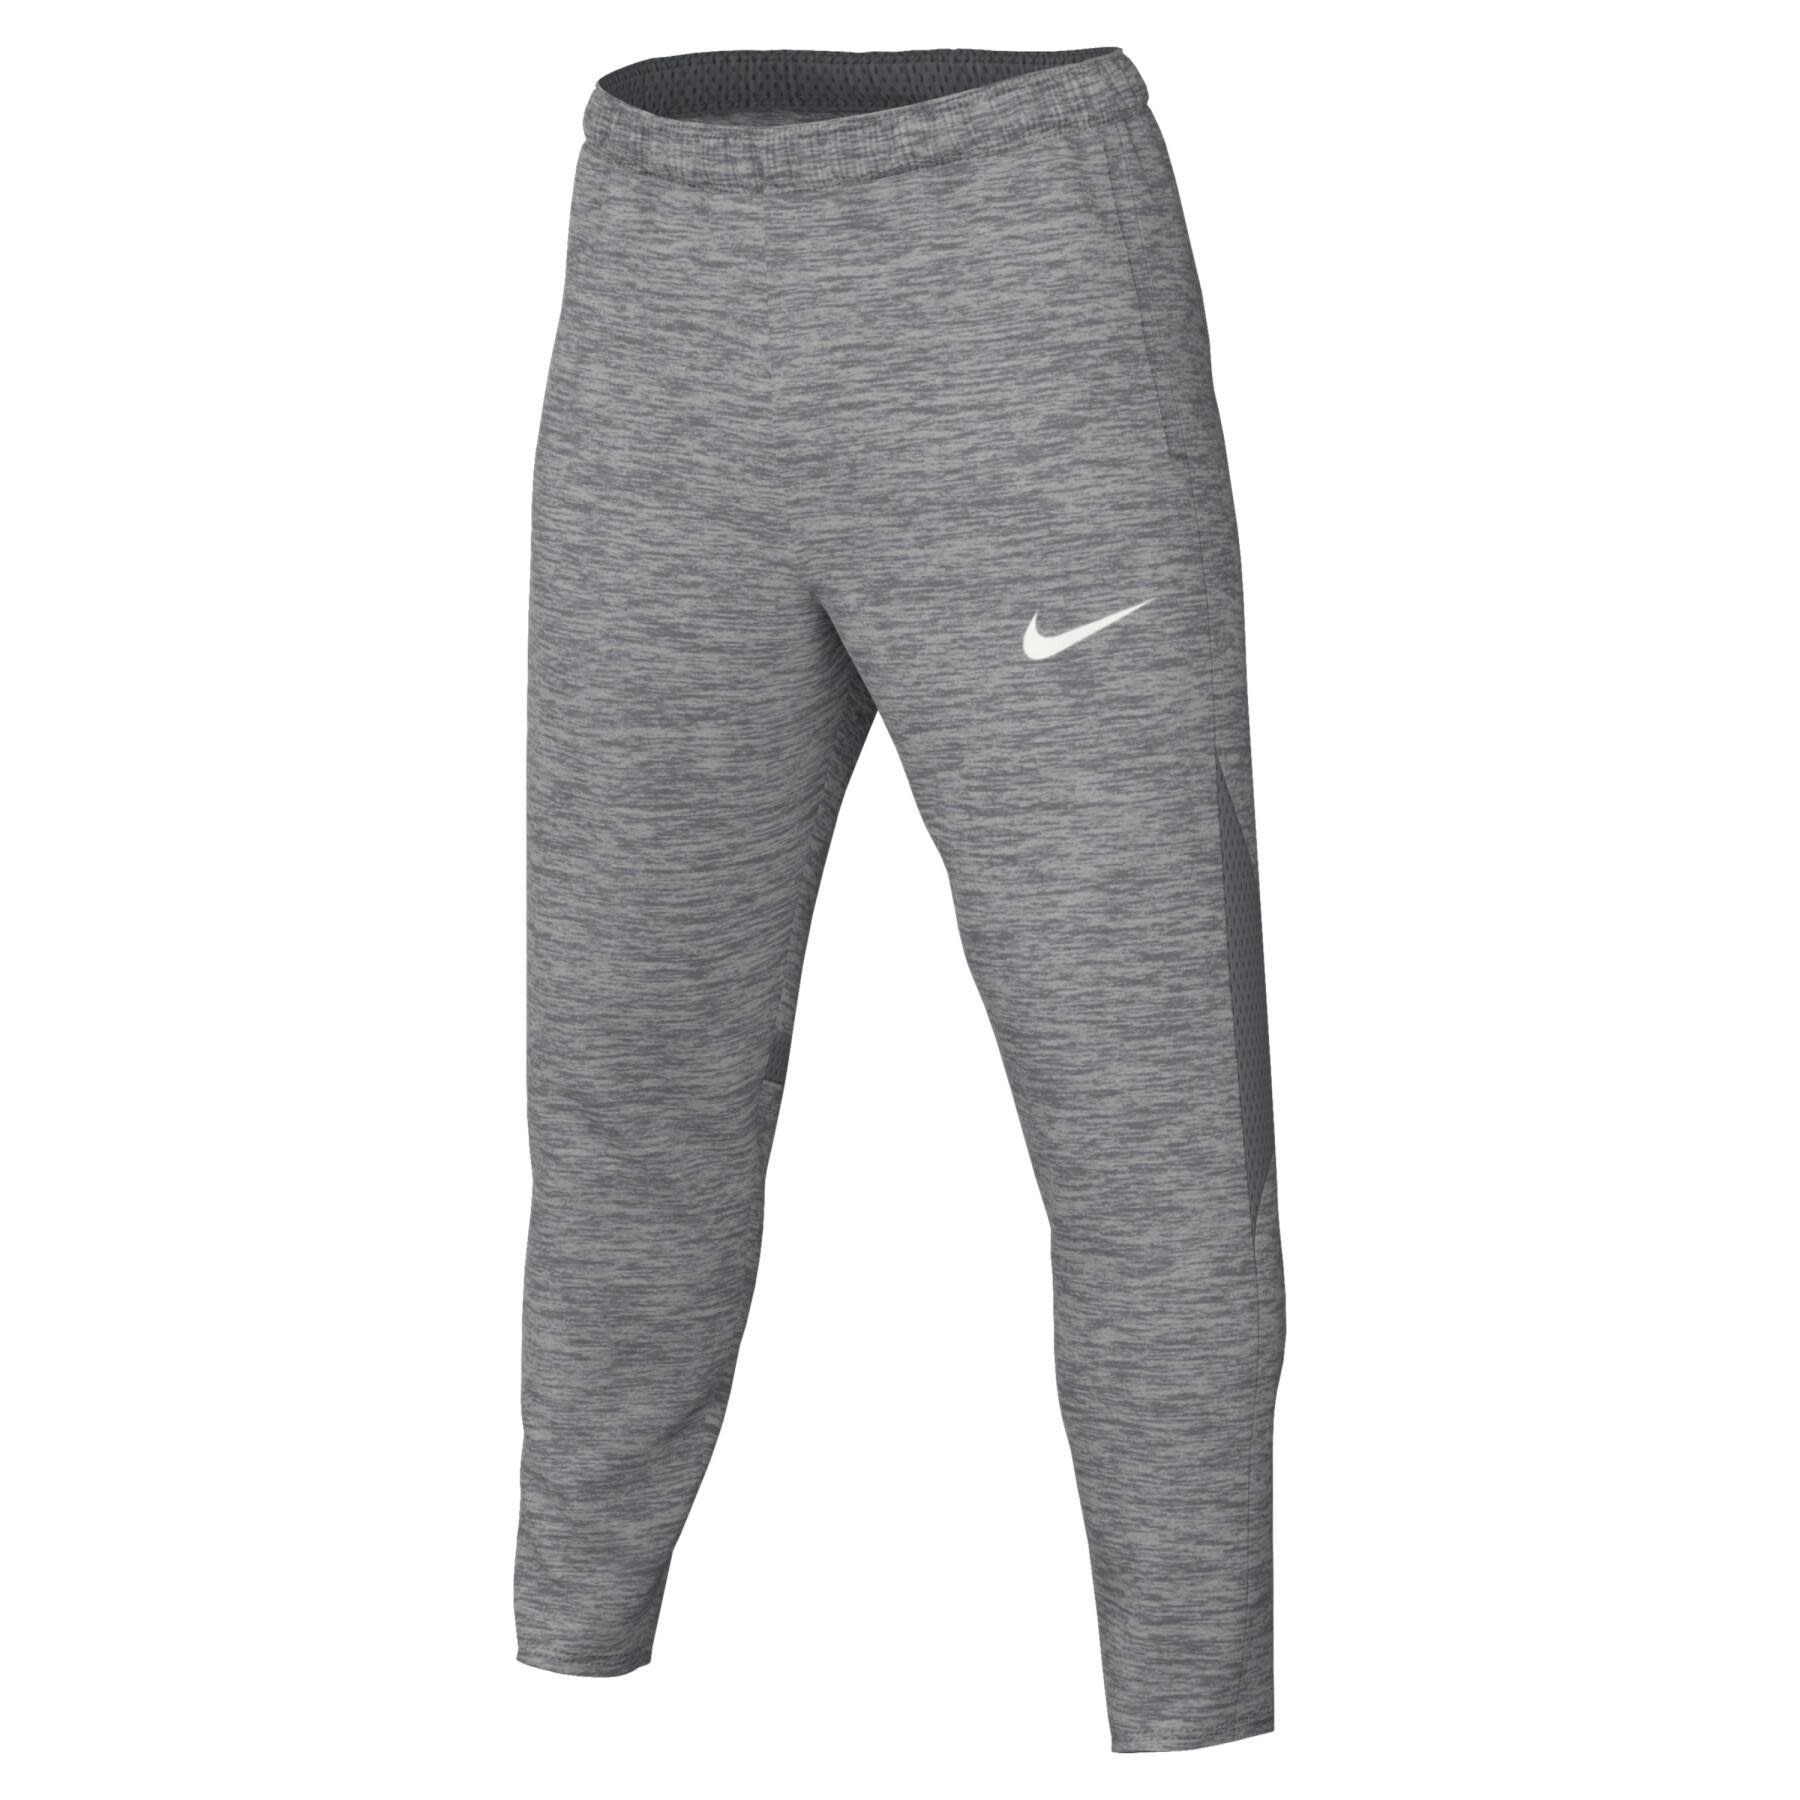 Womens Dri-FIT Fleece Pants & Tights. Nike.com